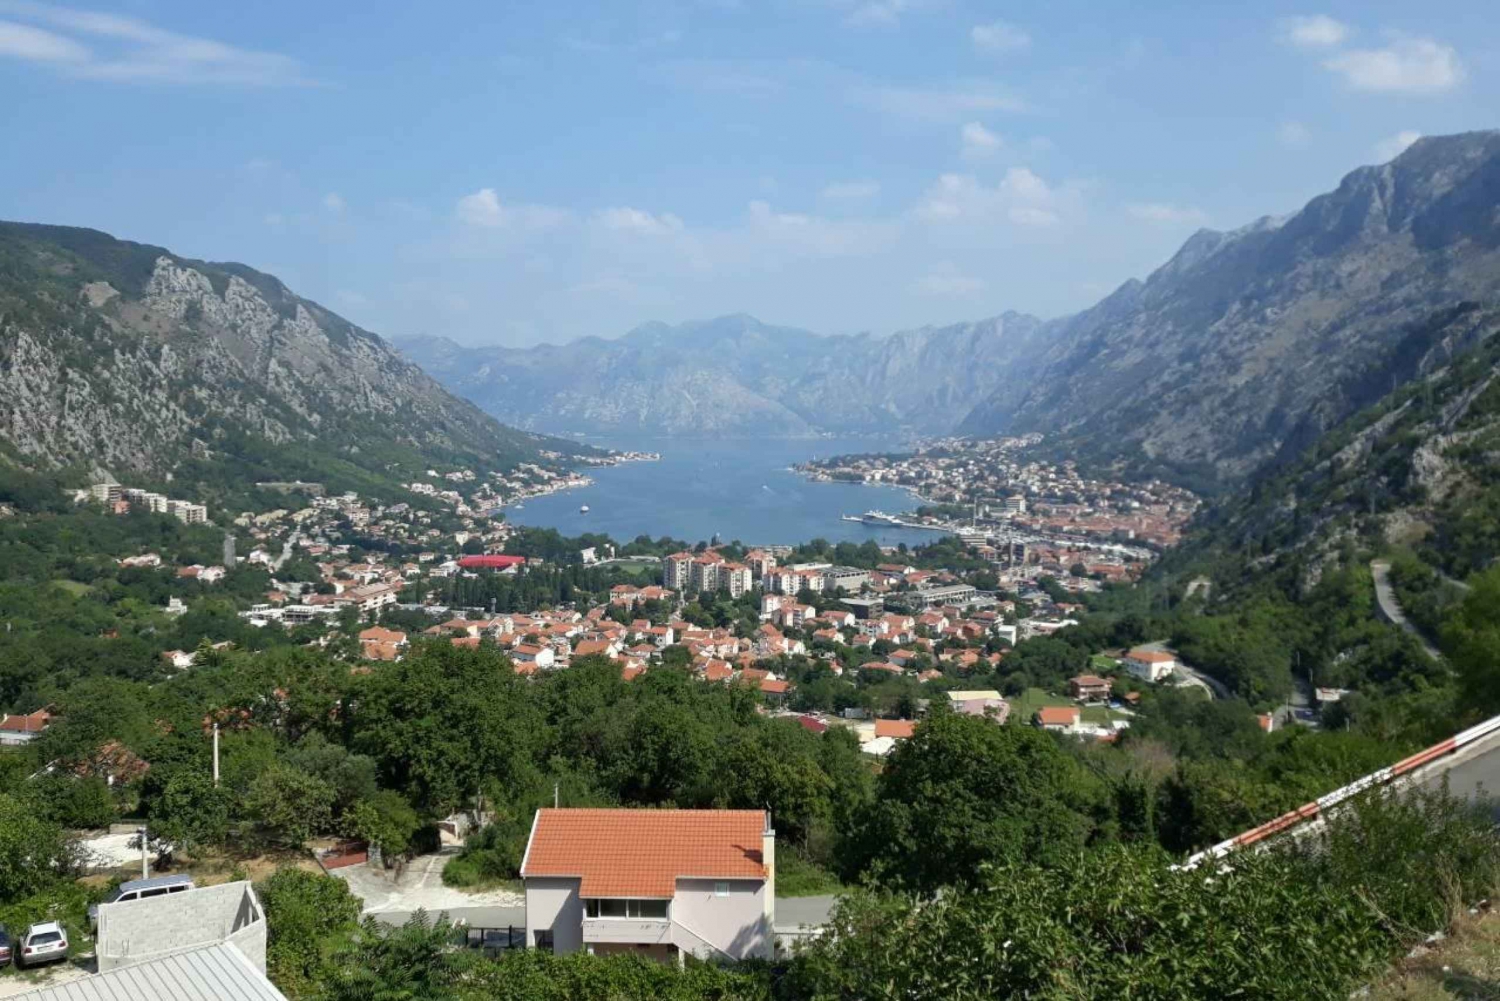 Kotor: Guided Full-Day Tour of Montenegro